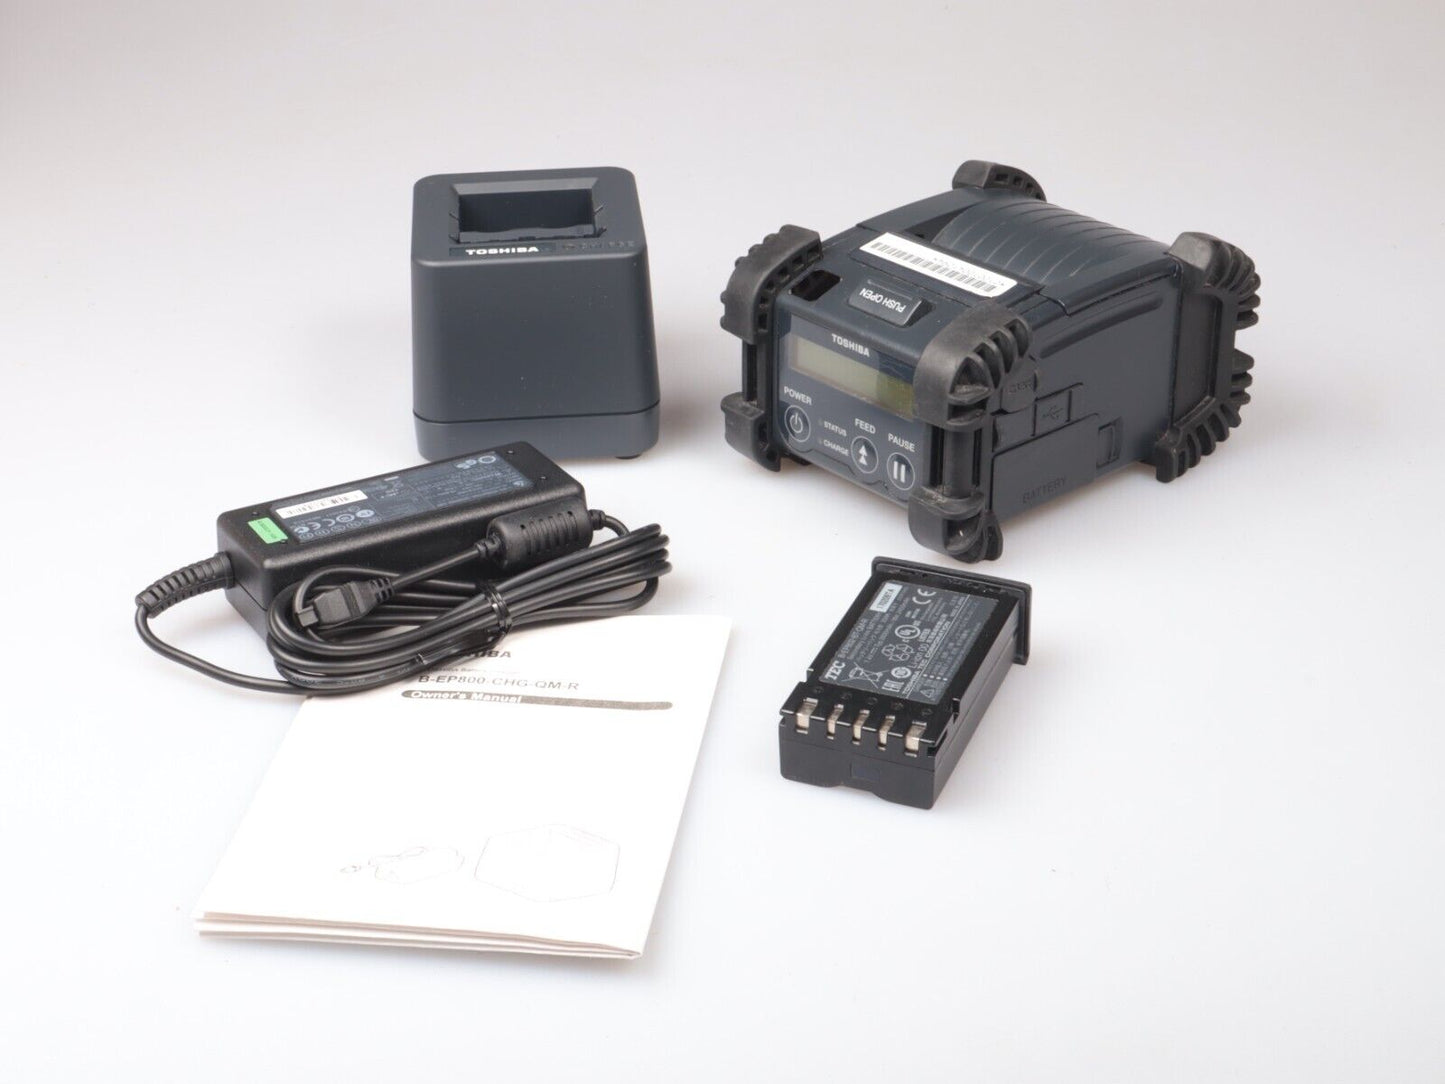 Toshiba Portable Printer B-EP2DL-GH40-QM-R | 2 X Battery & 1 Charger